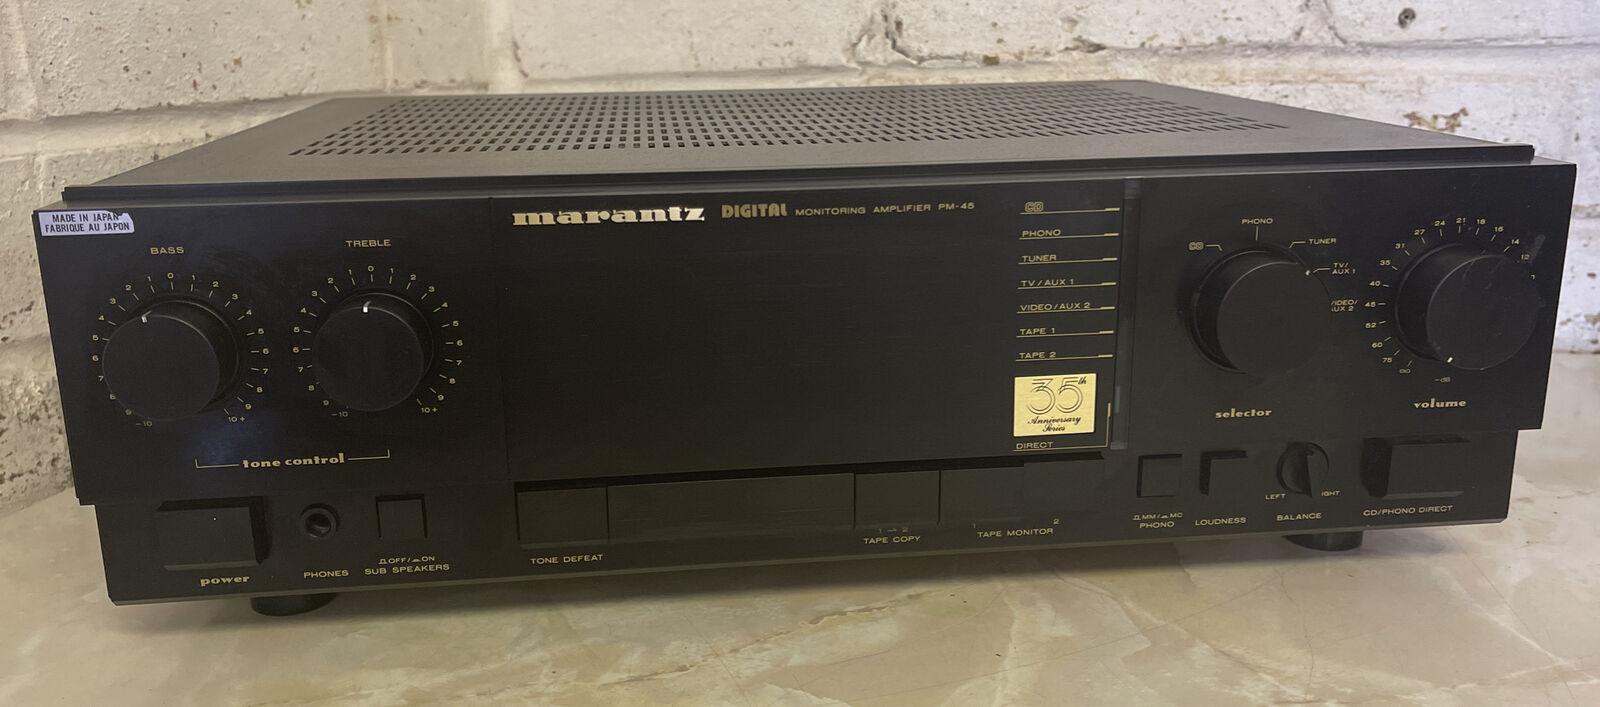 Marantz Digital Monitoring Amplifier PM-45 Untested - No Power Lead